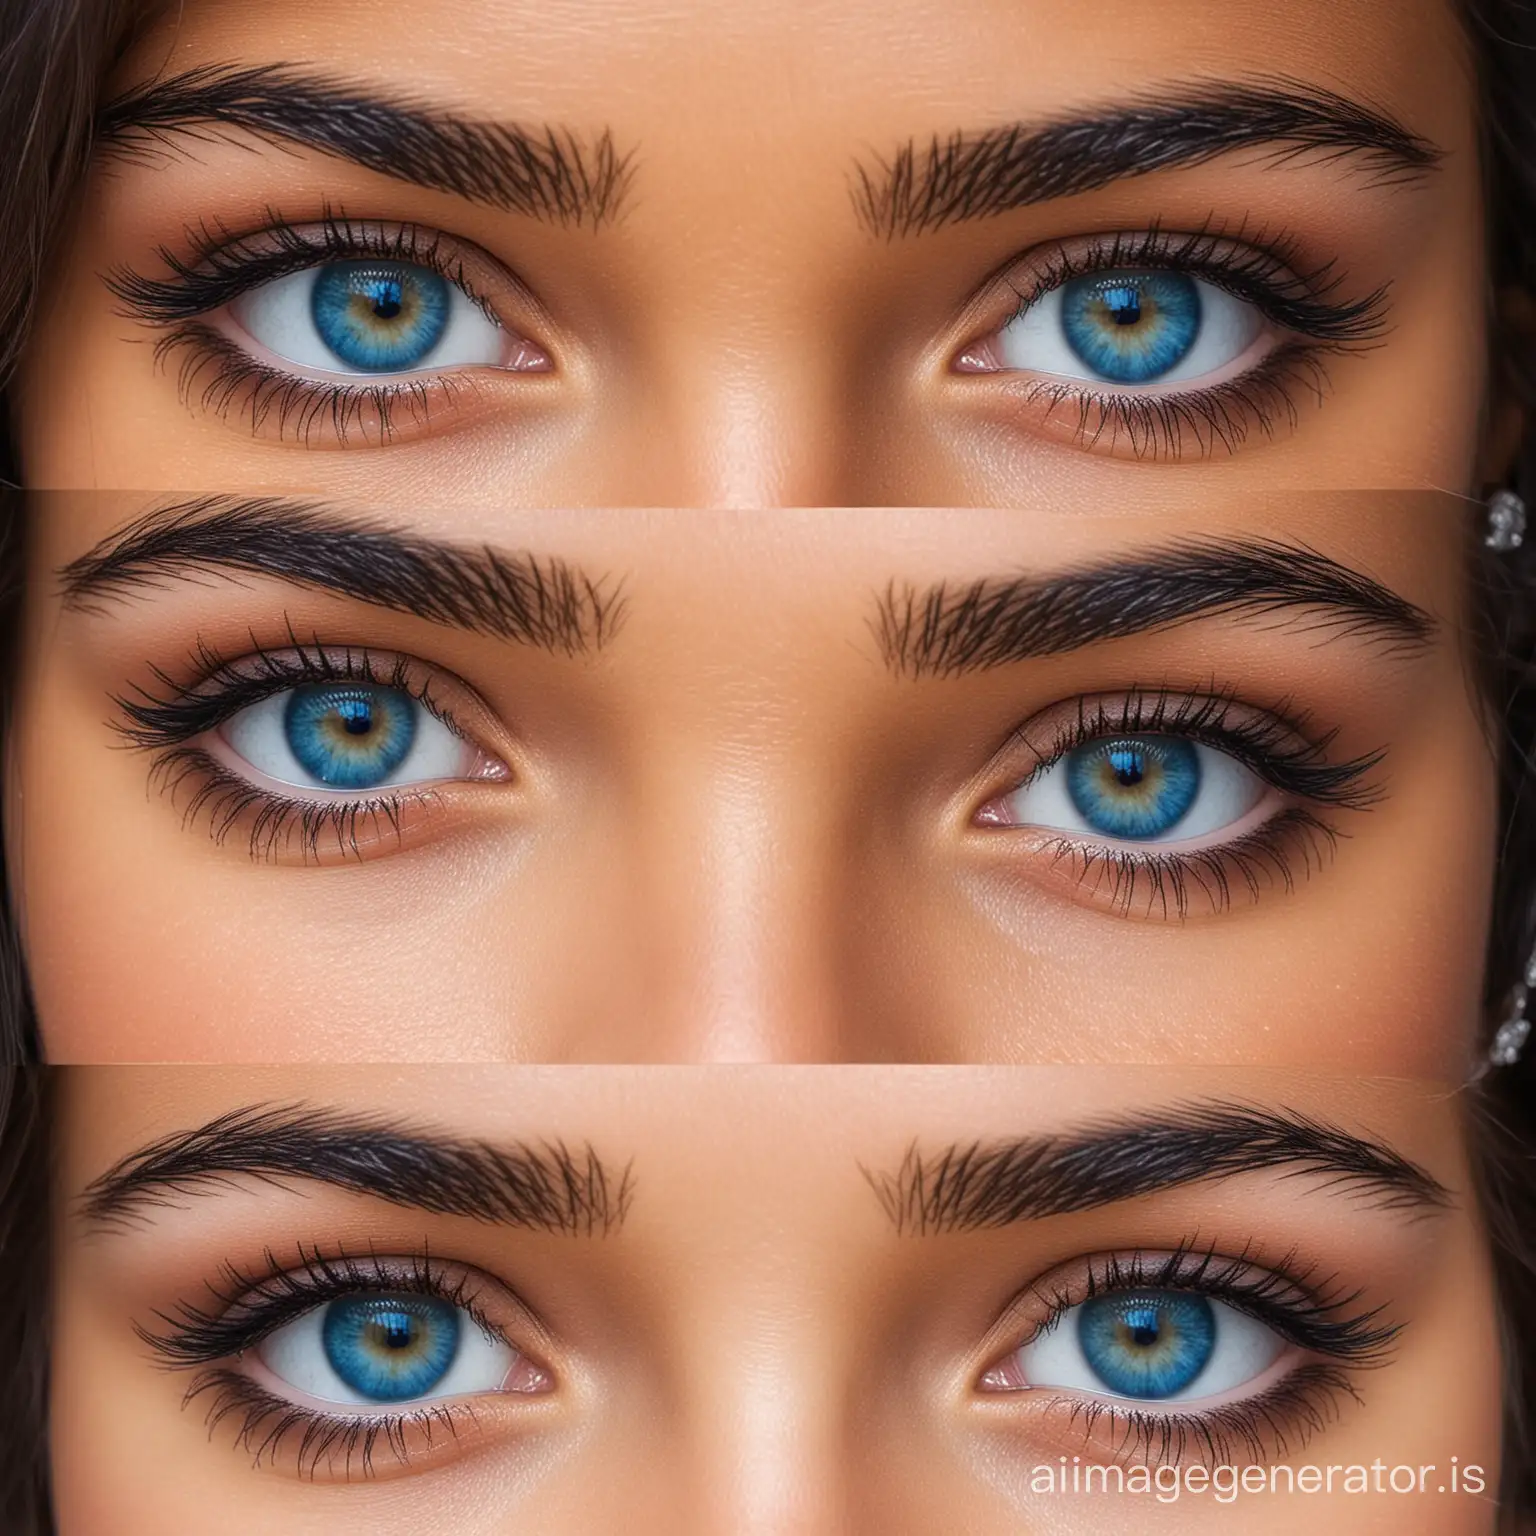 4 Beautiful Latino Girls with the Beautiful Eyes, Deep Eyes, Blue Eyes, Ocean Eyes